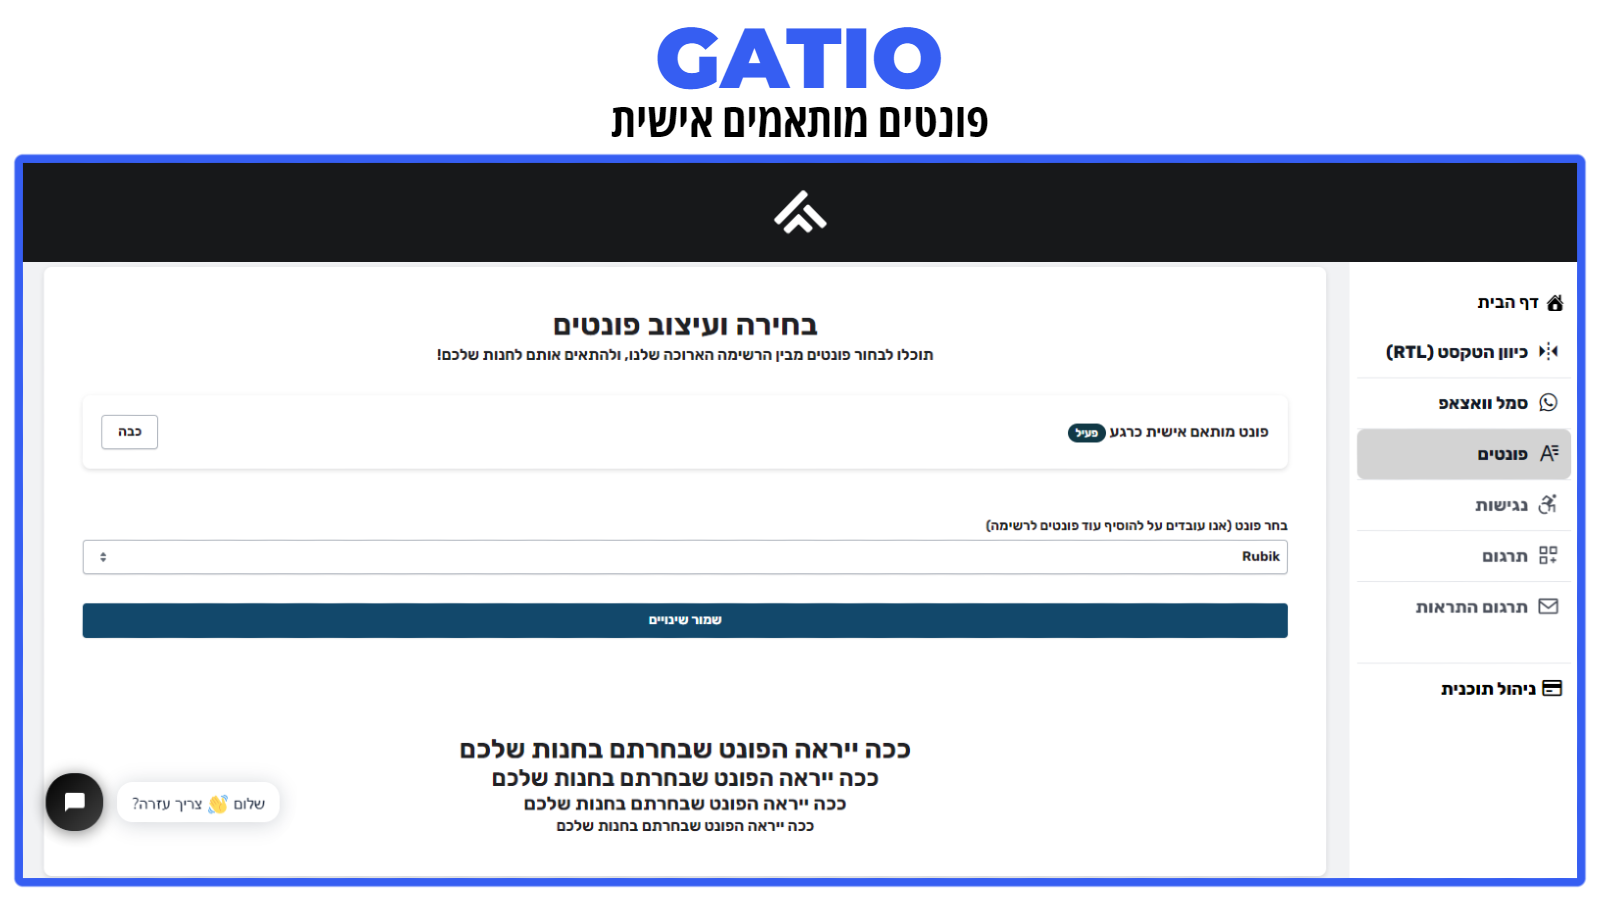 Gatio RTL - Custom Fonts